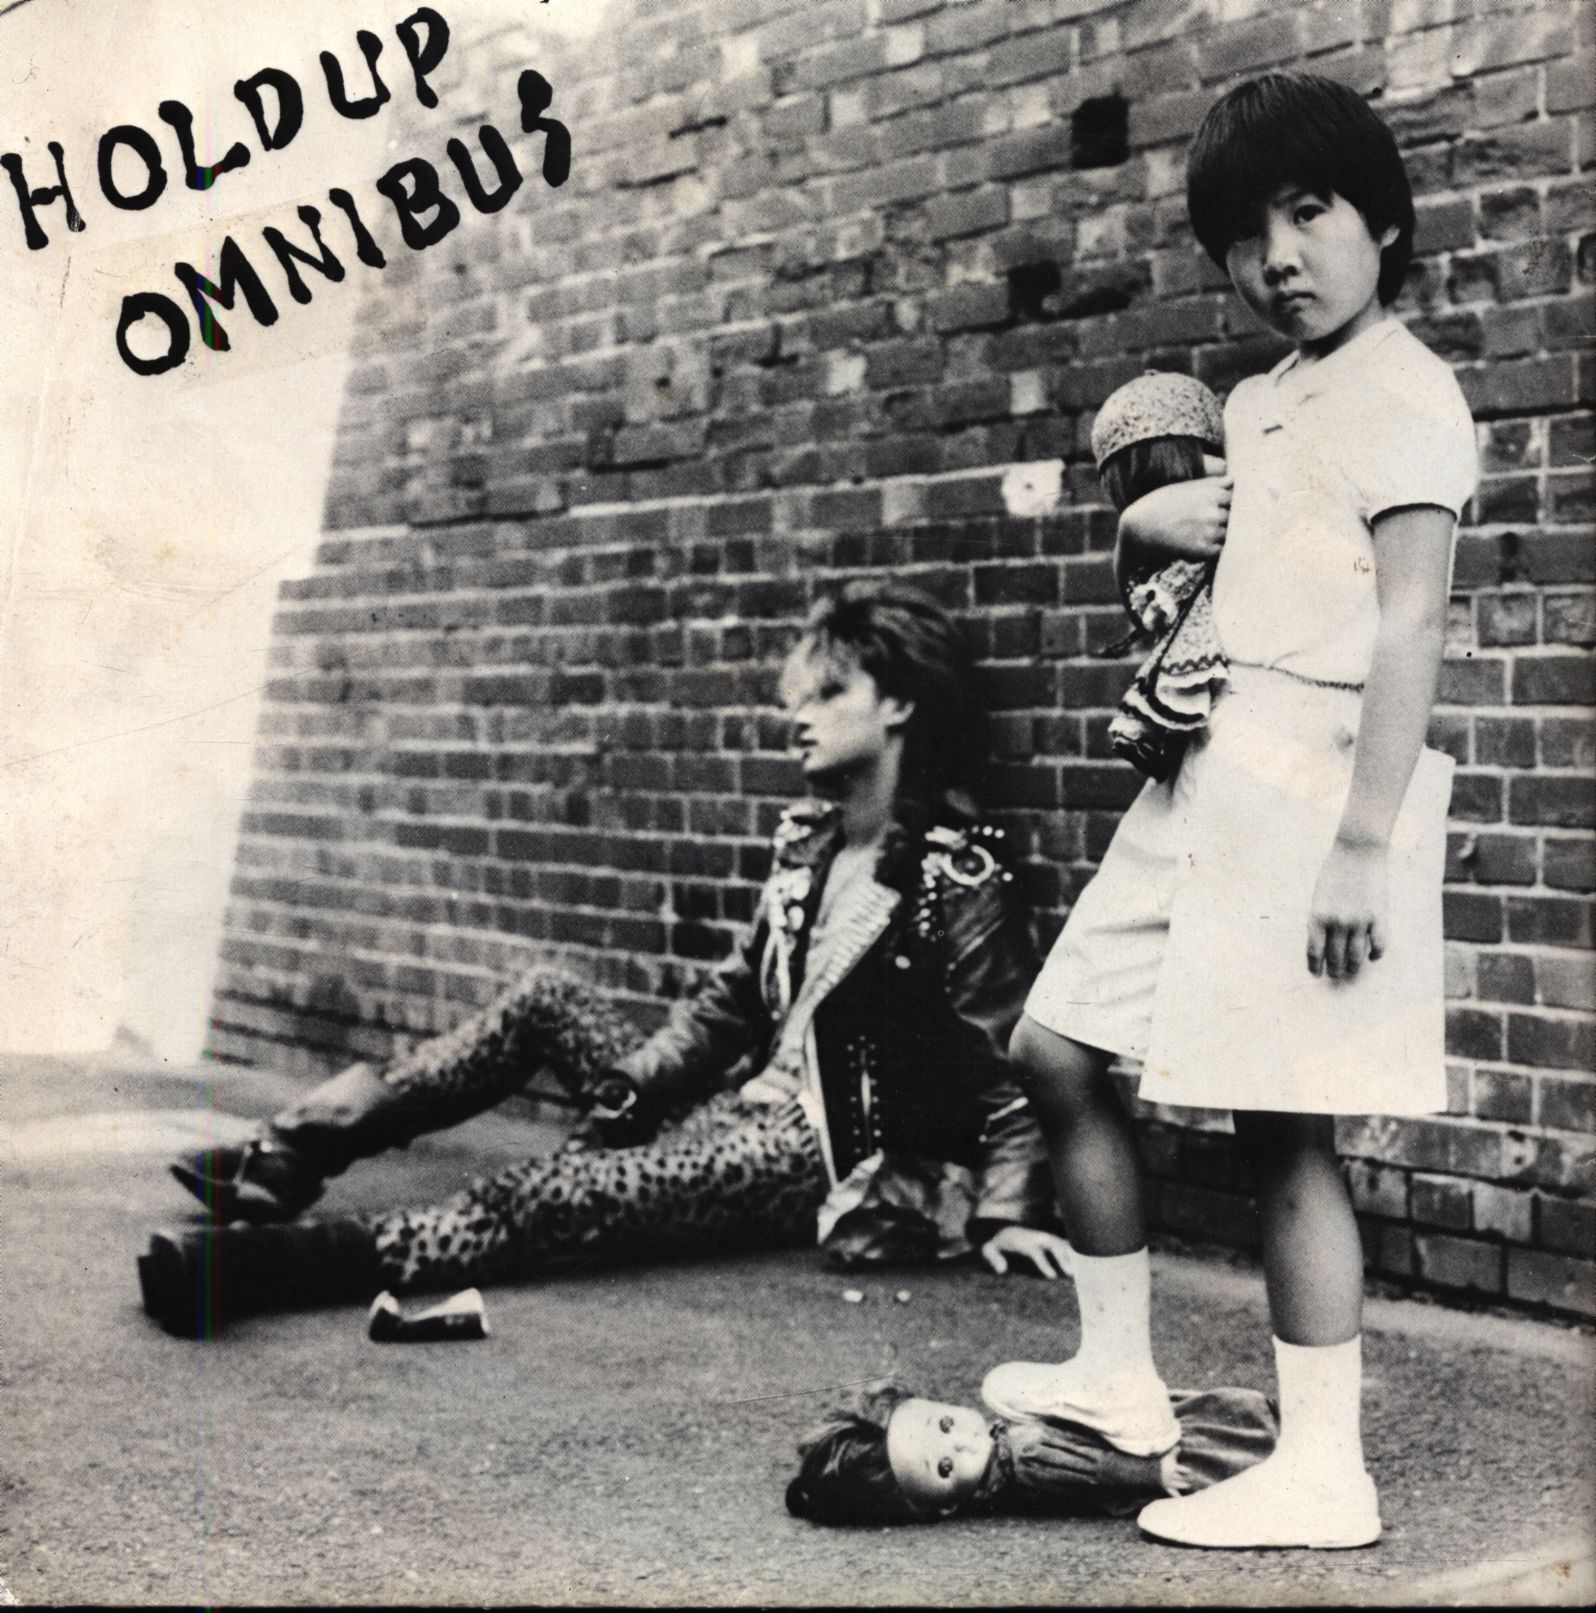 HOLD UP OMNIBUS - レコード